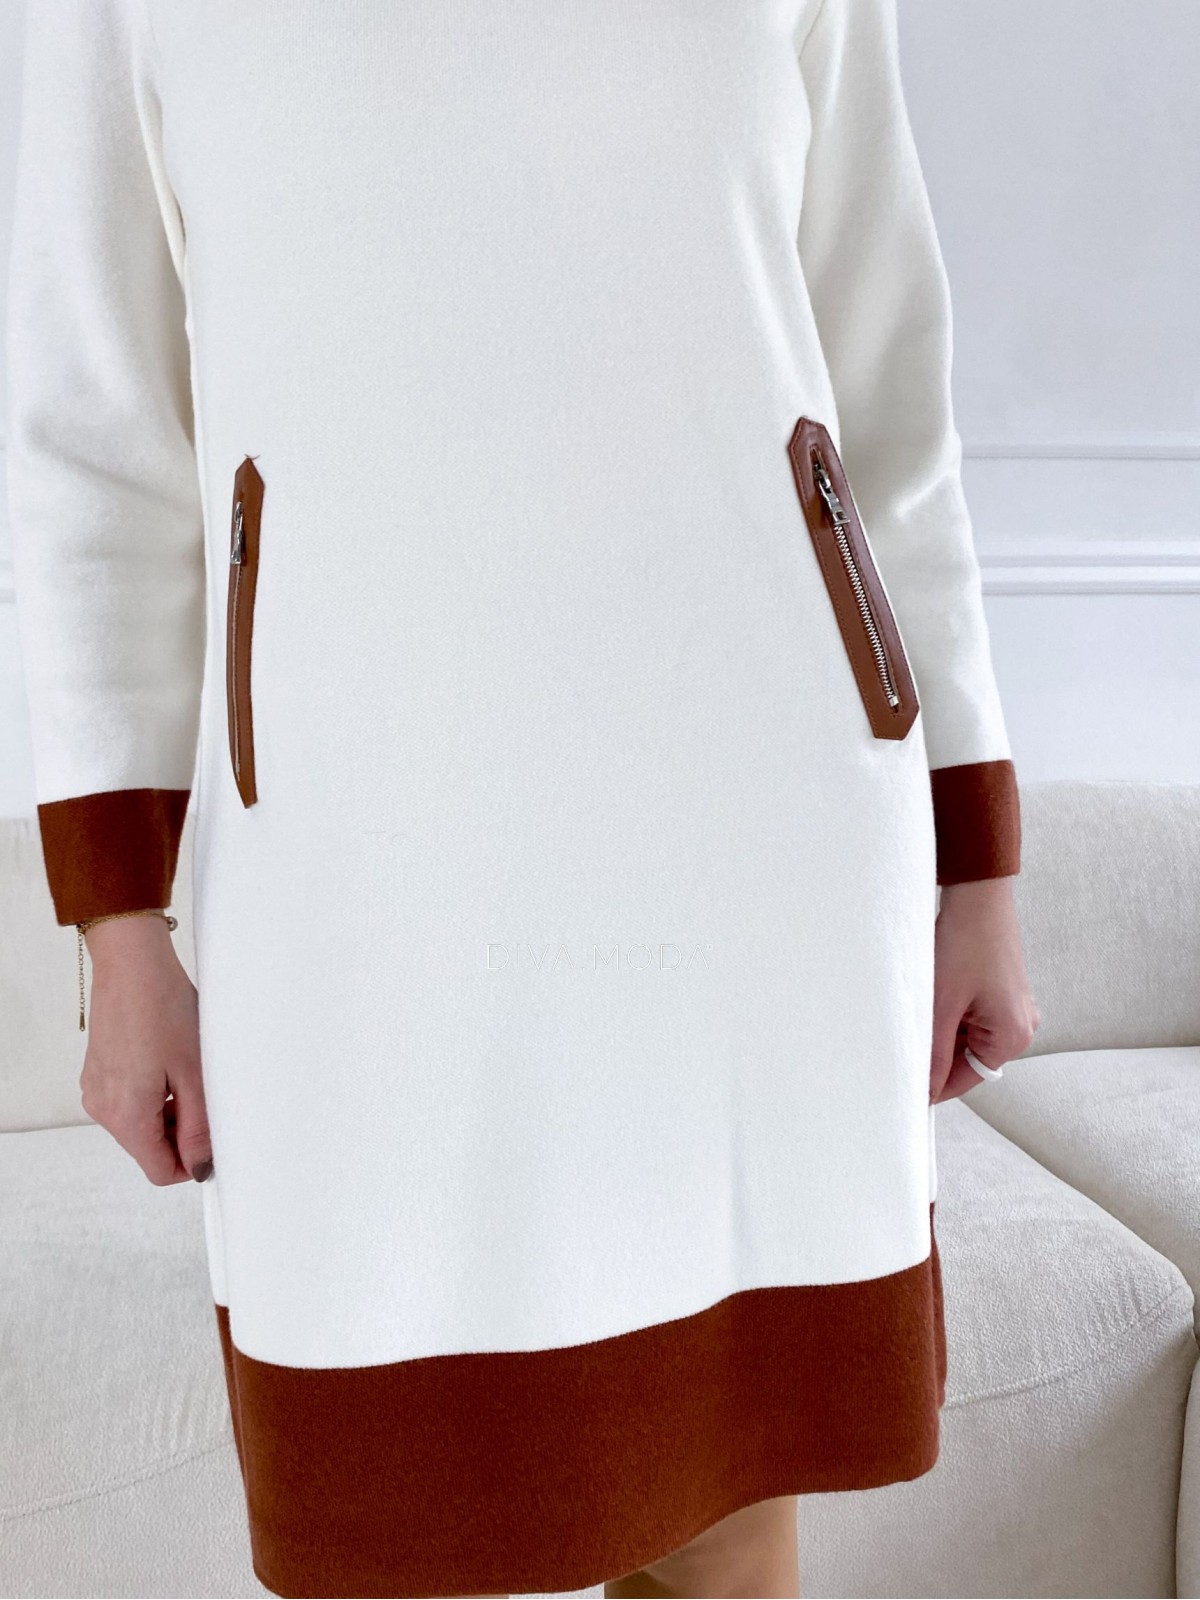 Úpletové šaty s koženkovou aplikací smetanově/skořicové P 49